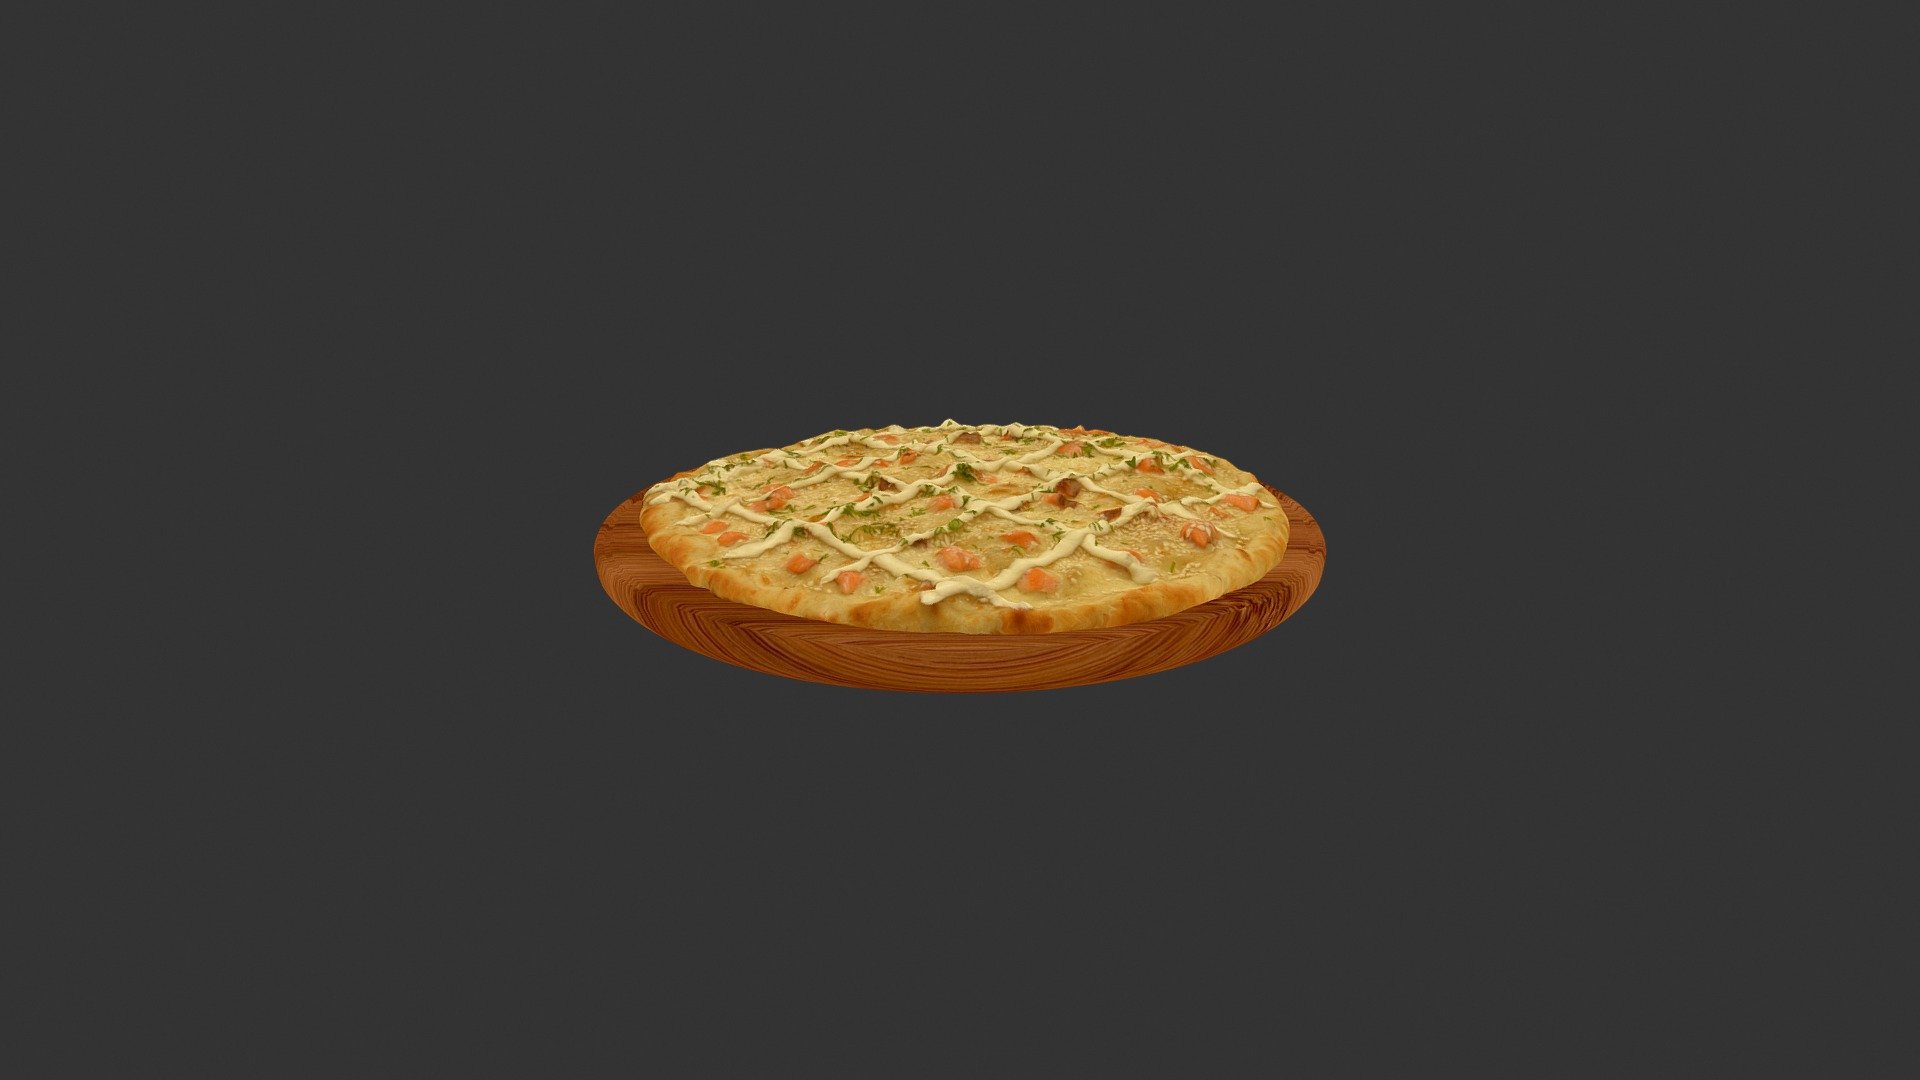 Піца Дольче (Square_pizza) - 3D model by alex.alexandrov.a 3d model